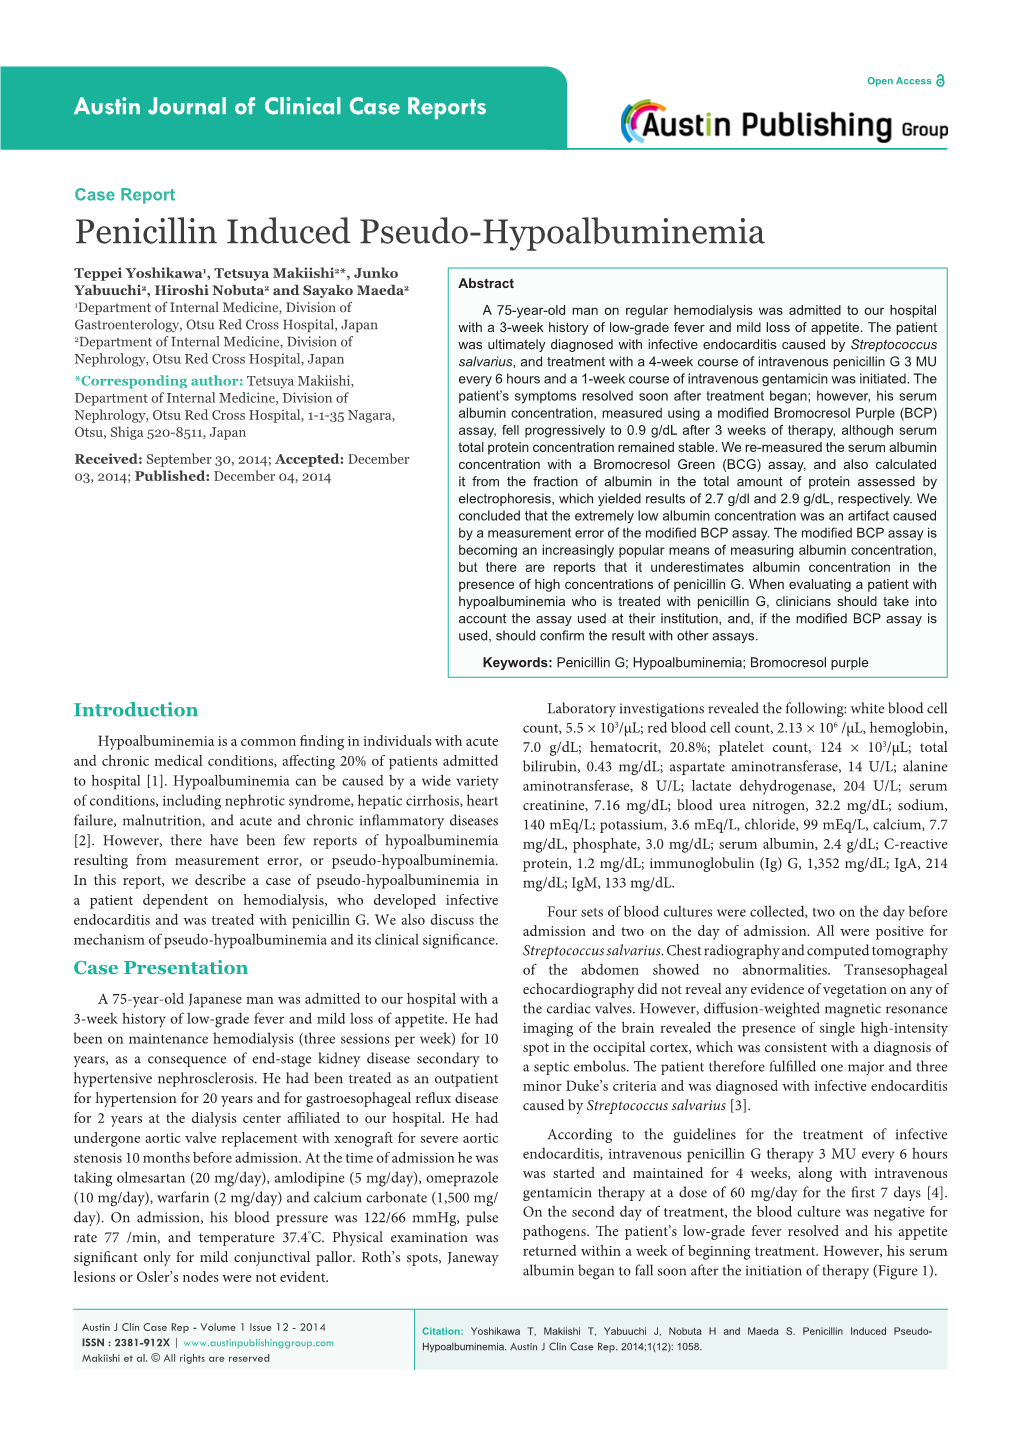 Penicillin Induced Pseudo-Hypoalbuminemia